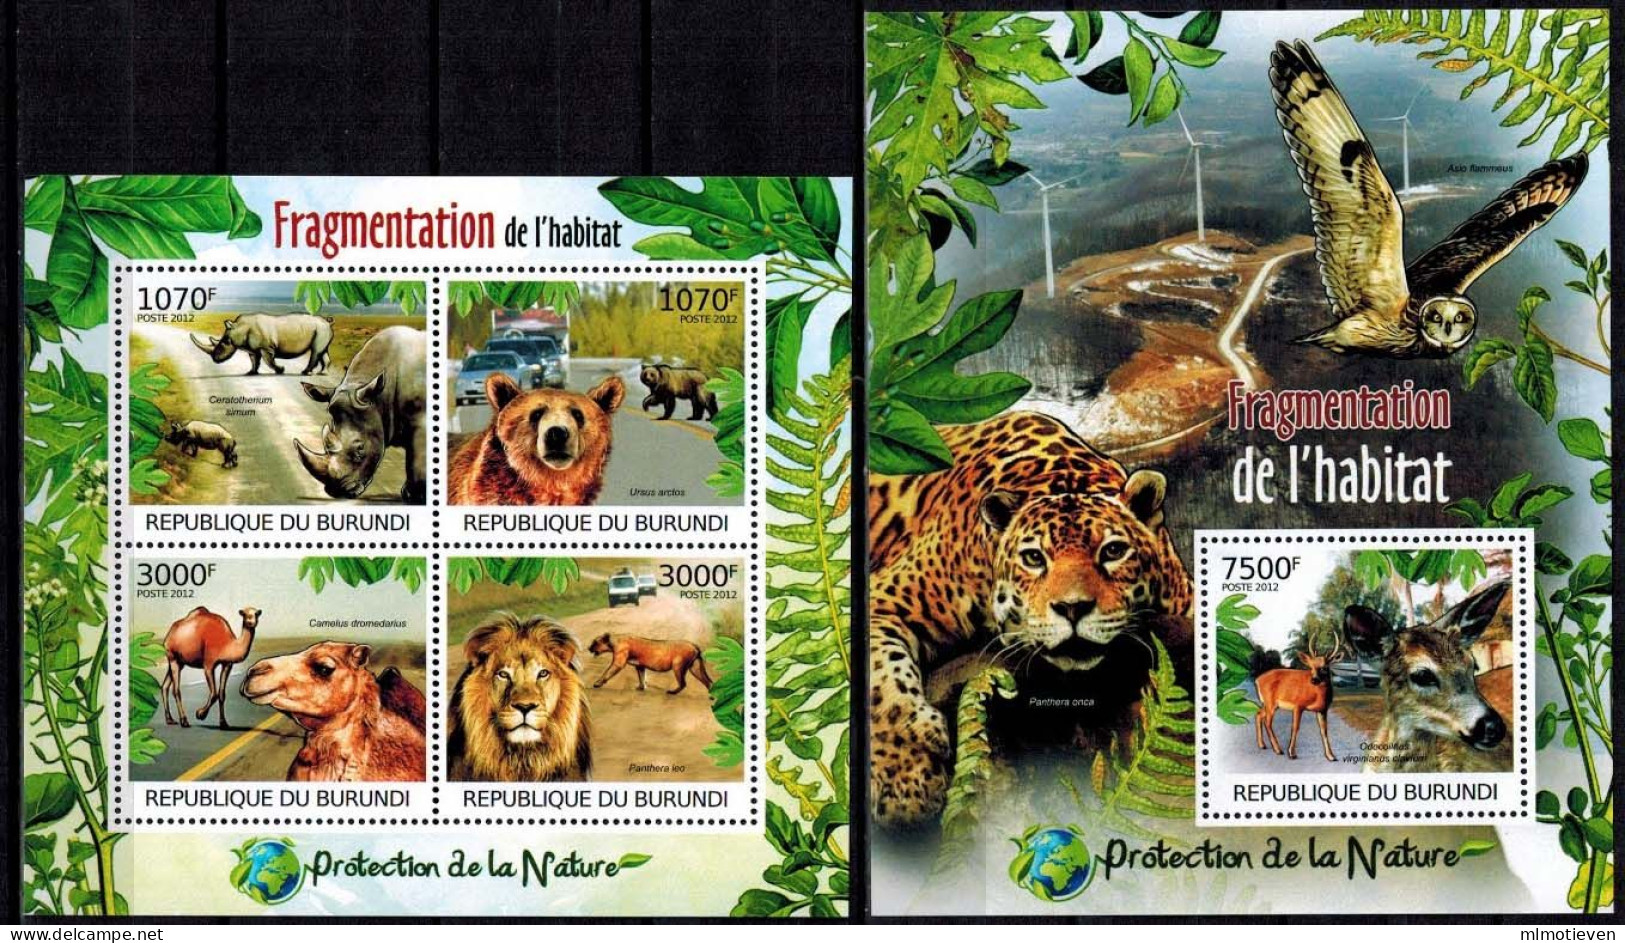 MDA-BK21-561 MINT ¤ BURUNDI 2012 KOMPL. SET ¤ FRAGMENTATION DE L'HABITAT  ENDANGERED SPECIES - ANIMALS OF THE WORLD - Gibier